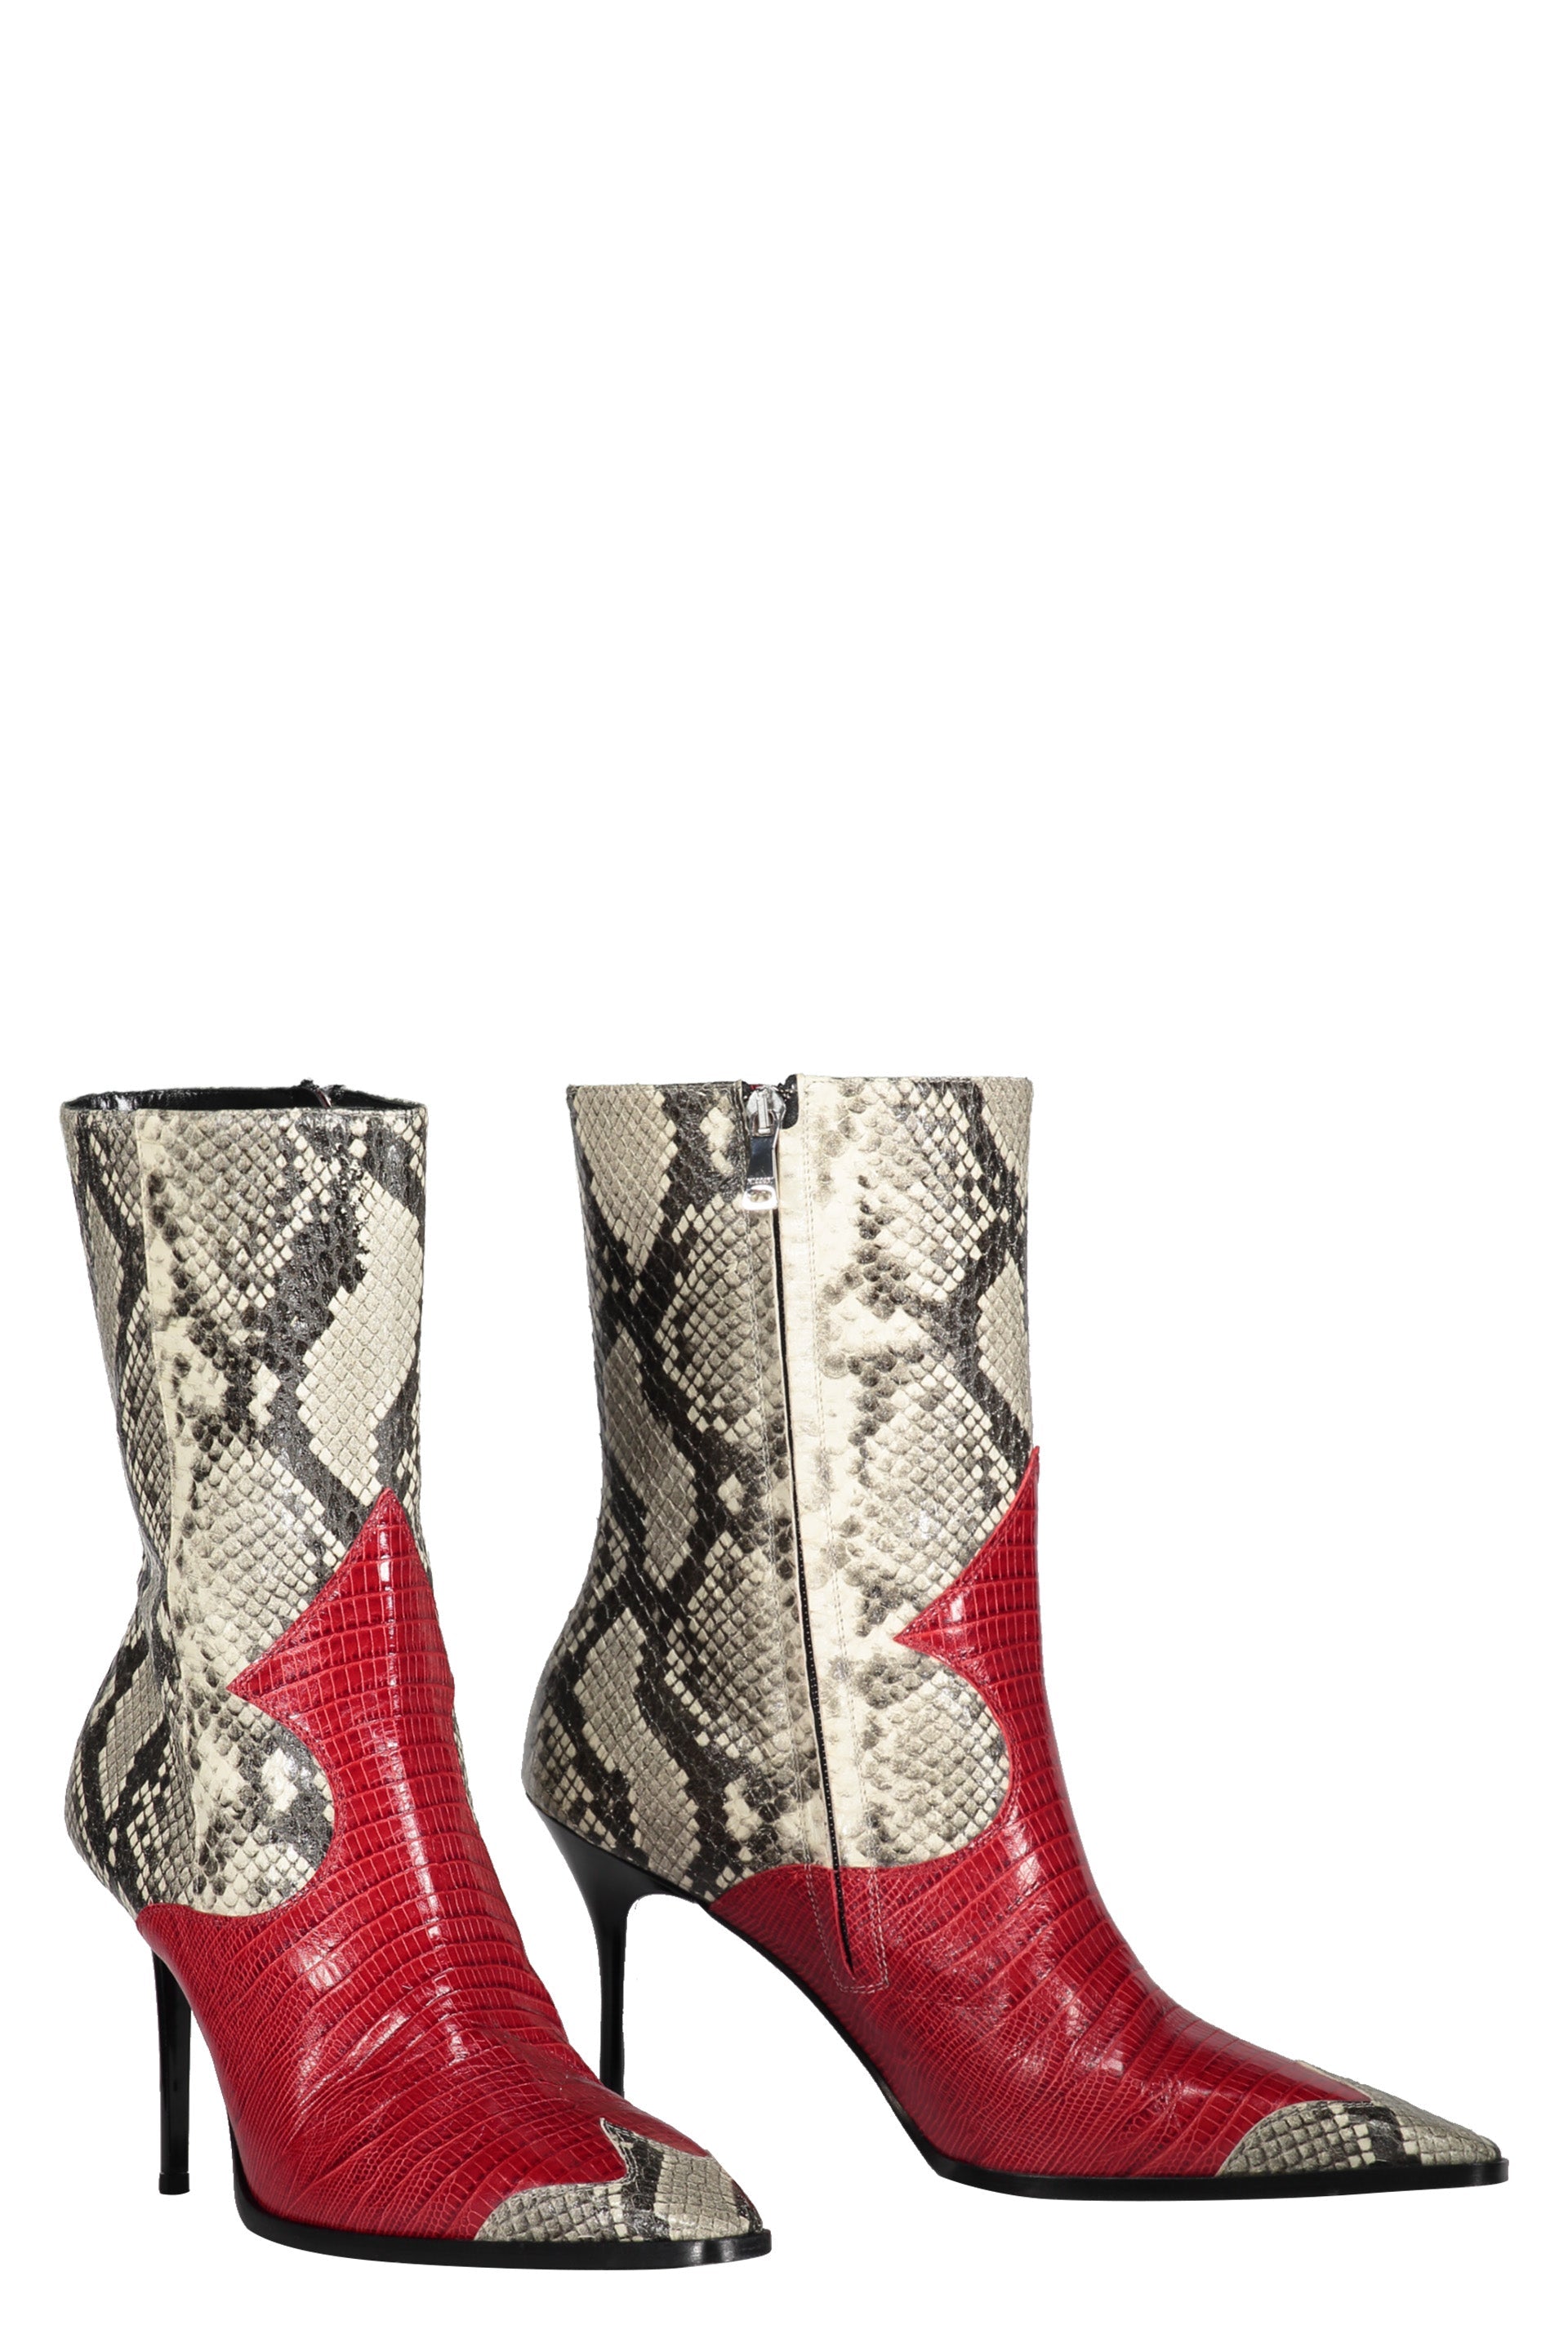 Snakeskin print heels ankle boots